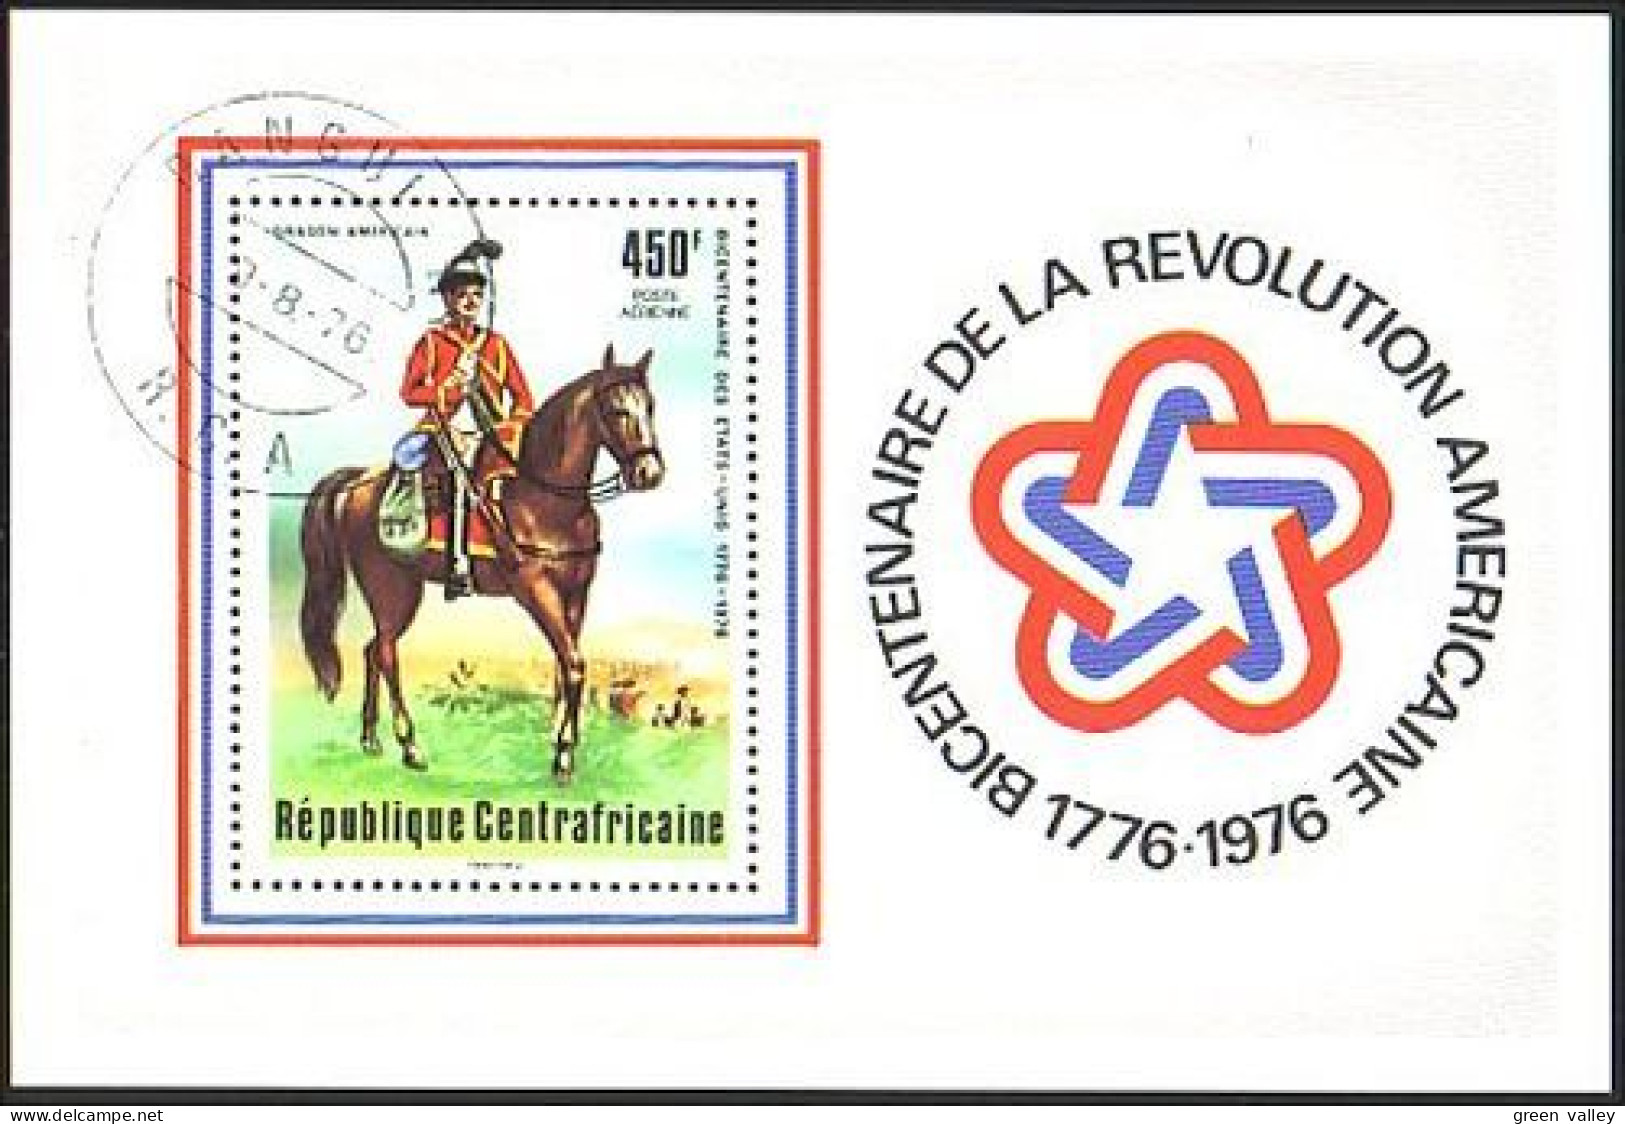 Centrafrique Revolution Americaine (A51-460b) - Indépendance USA